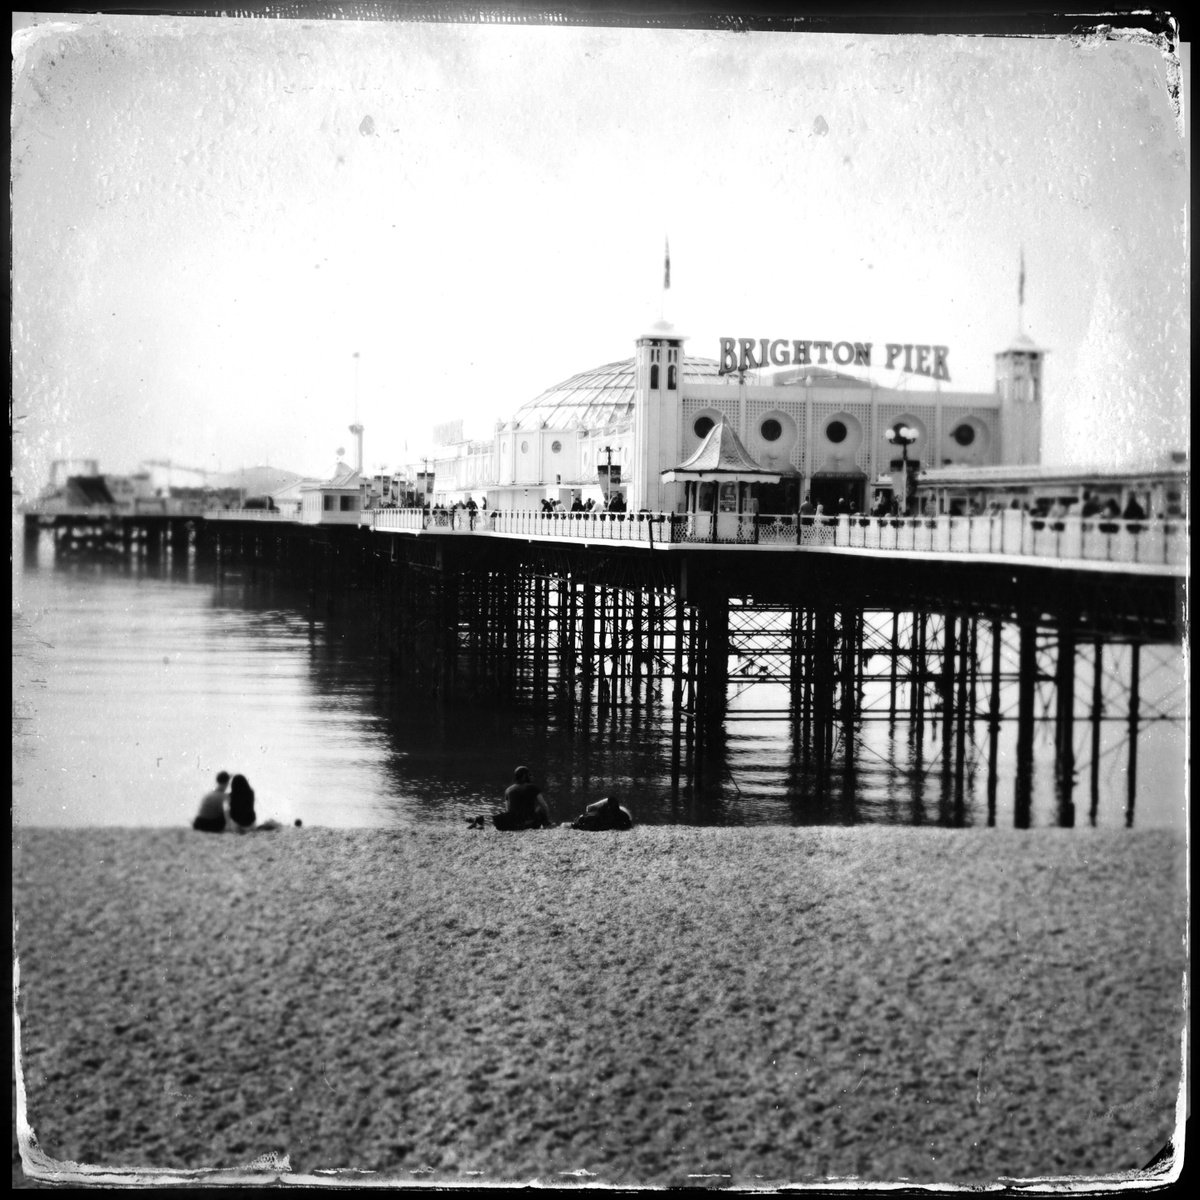 Brighton Pier by Anna Bush